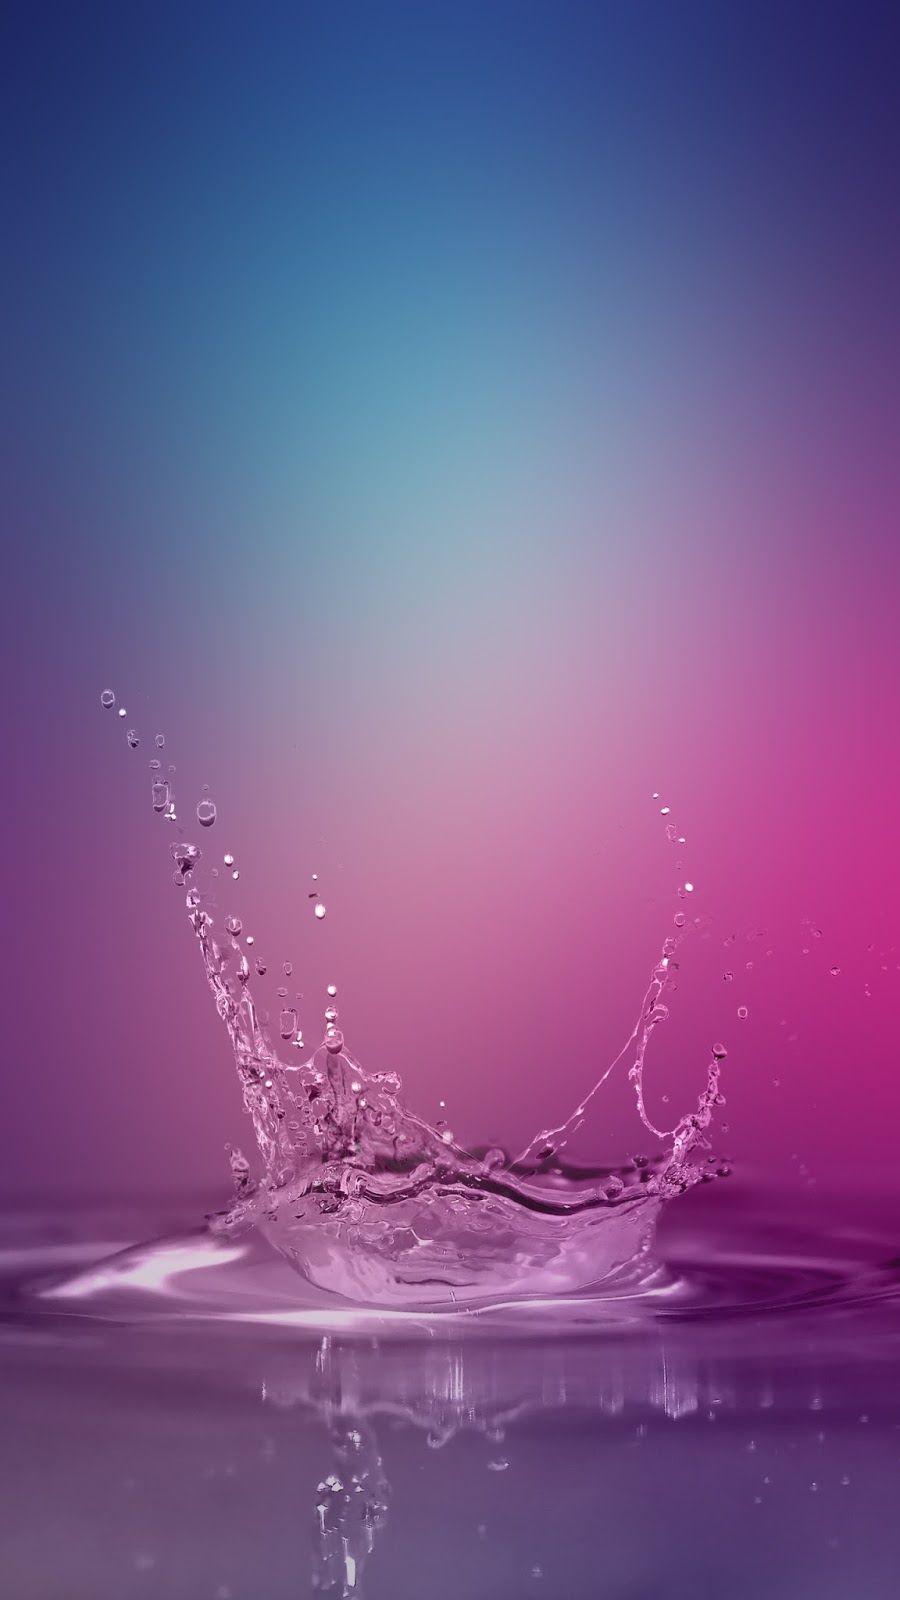 Water Splash Wallpaper Galaxy S7 Edge. Free Wallpaper Phone